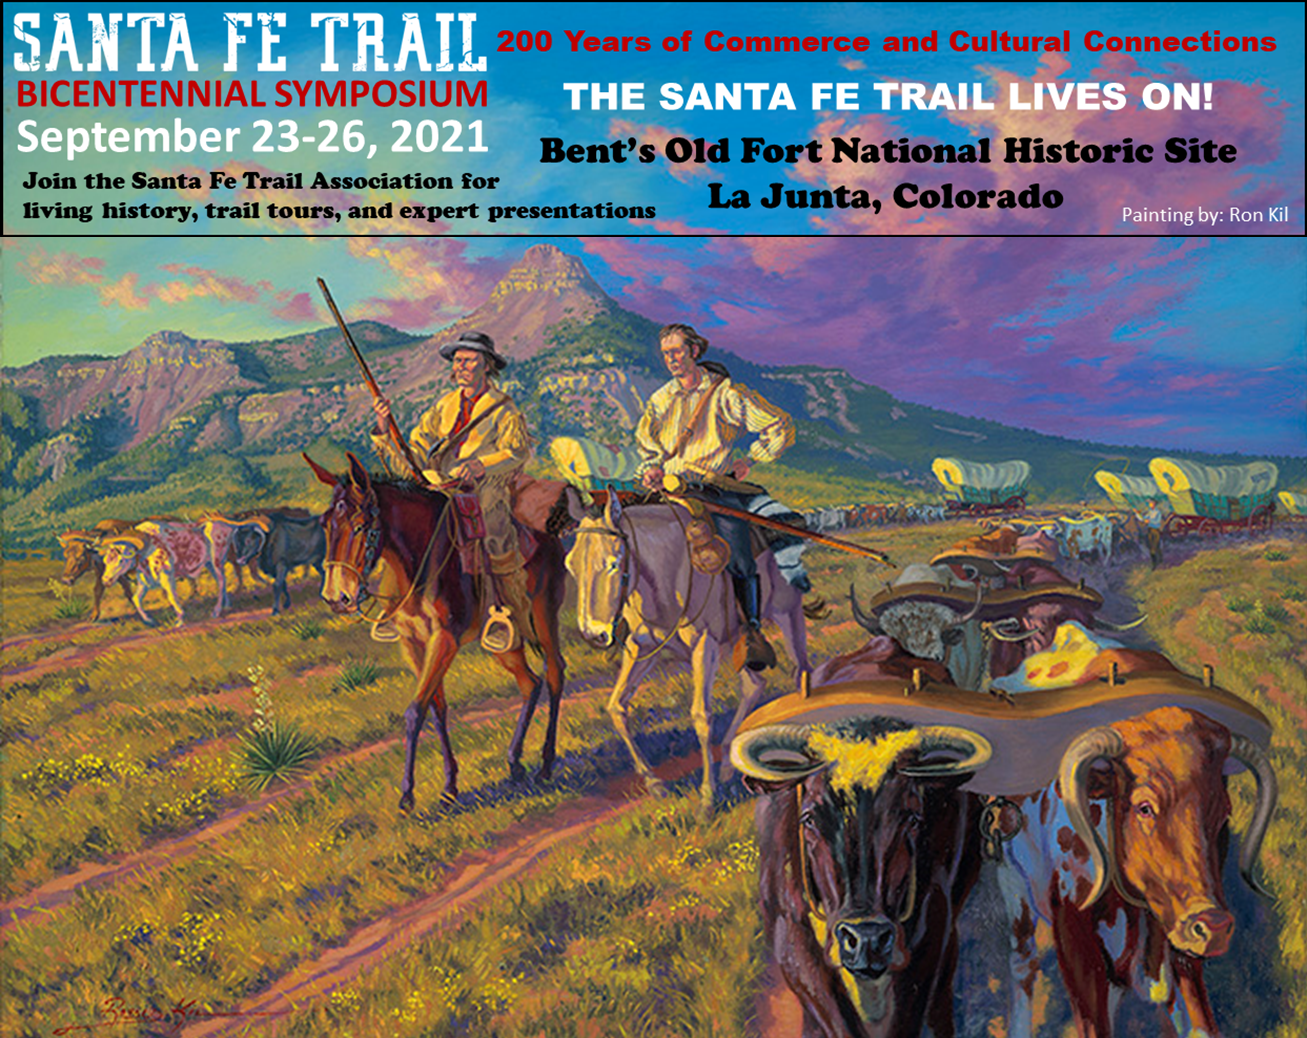 Ron Kil Santa Fe Trail Bicentennial Symposium SECO News seconews.org